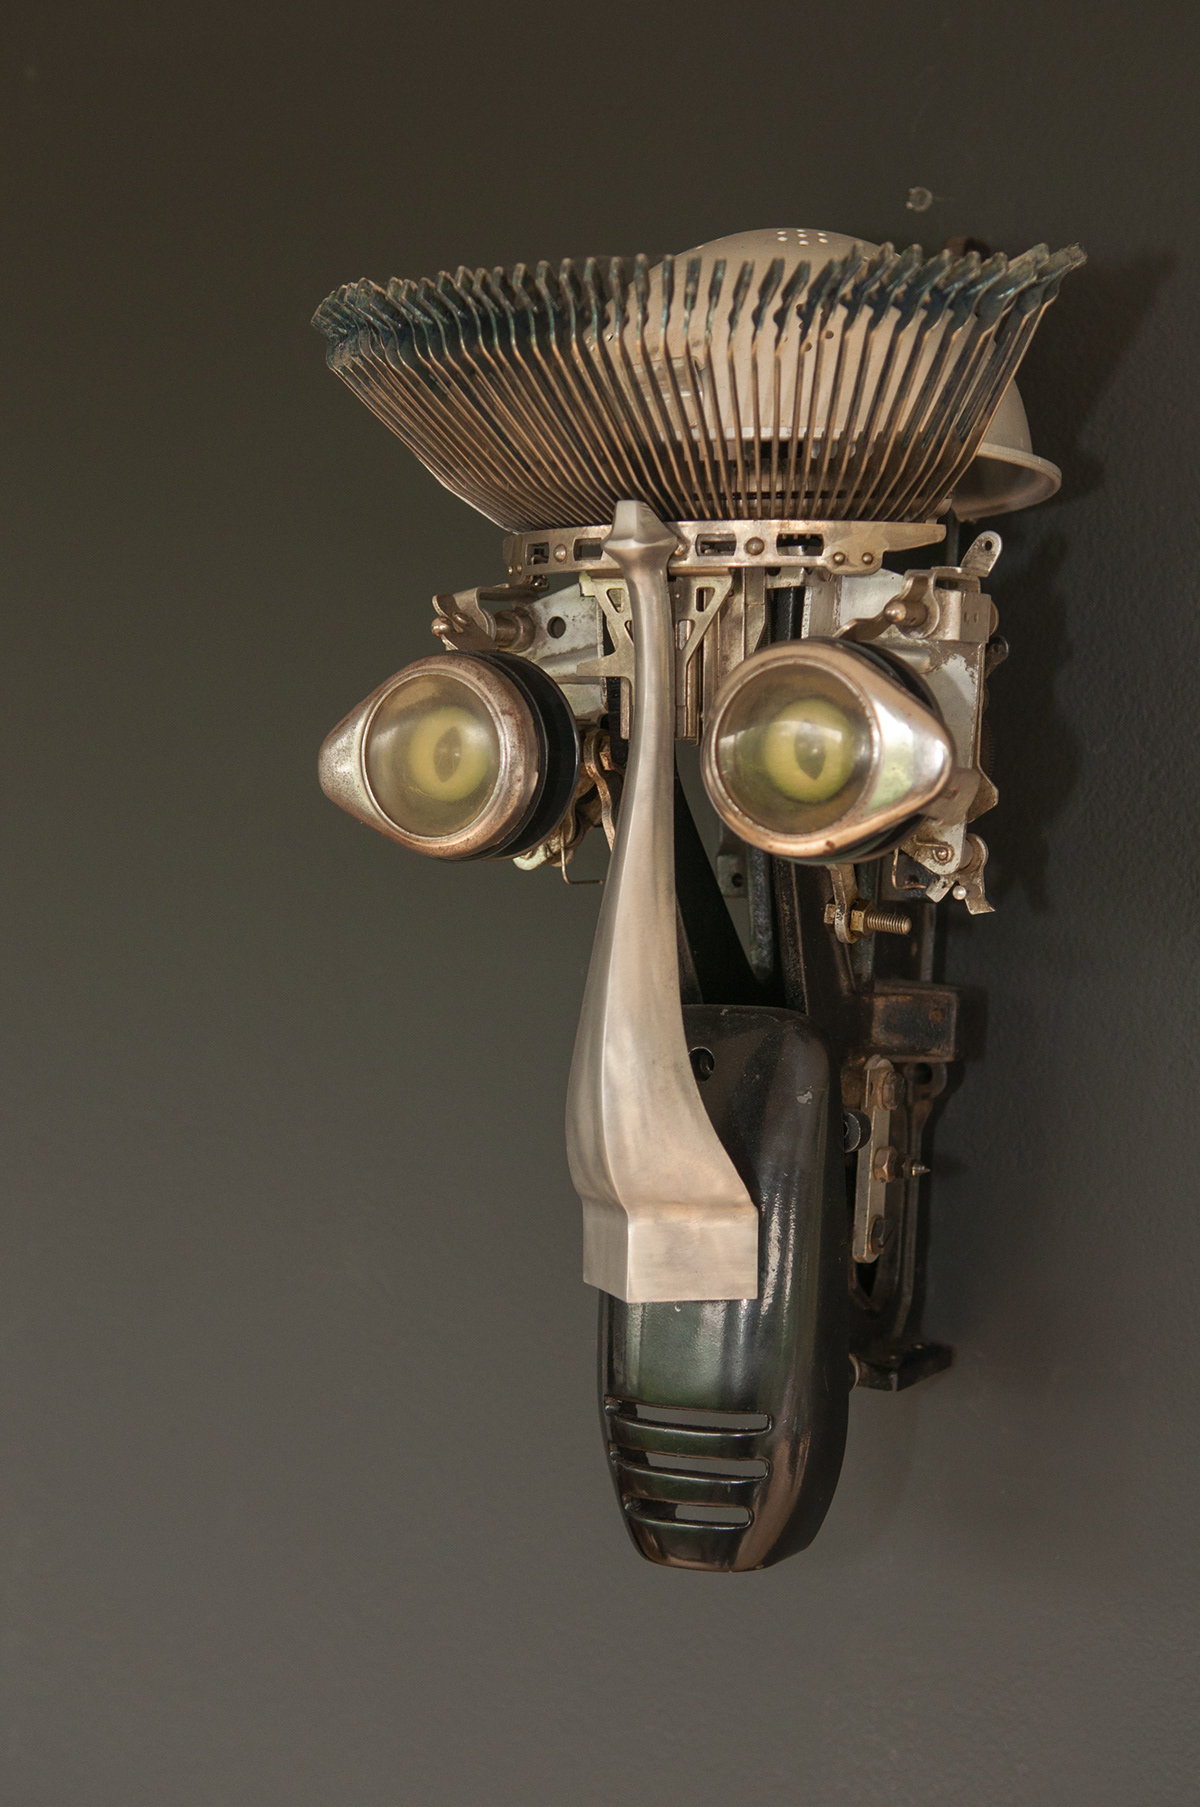 Tutankhamun Tutankhamon mask head typewriter recycled art junkart junk art upcyled